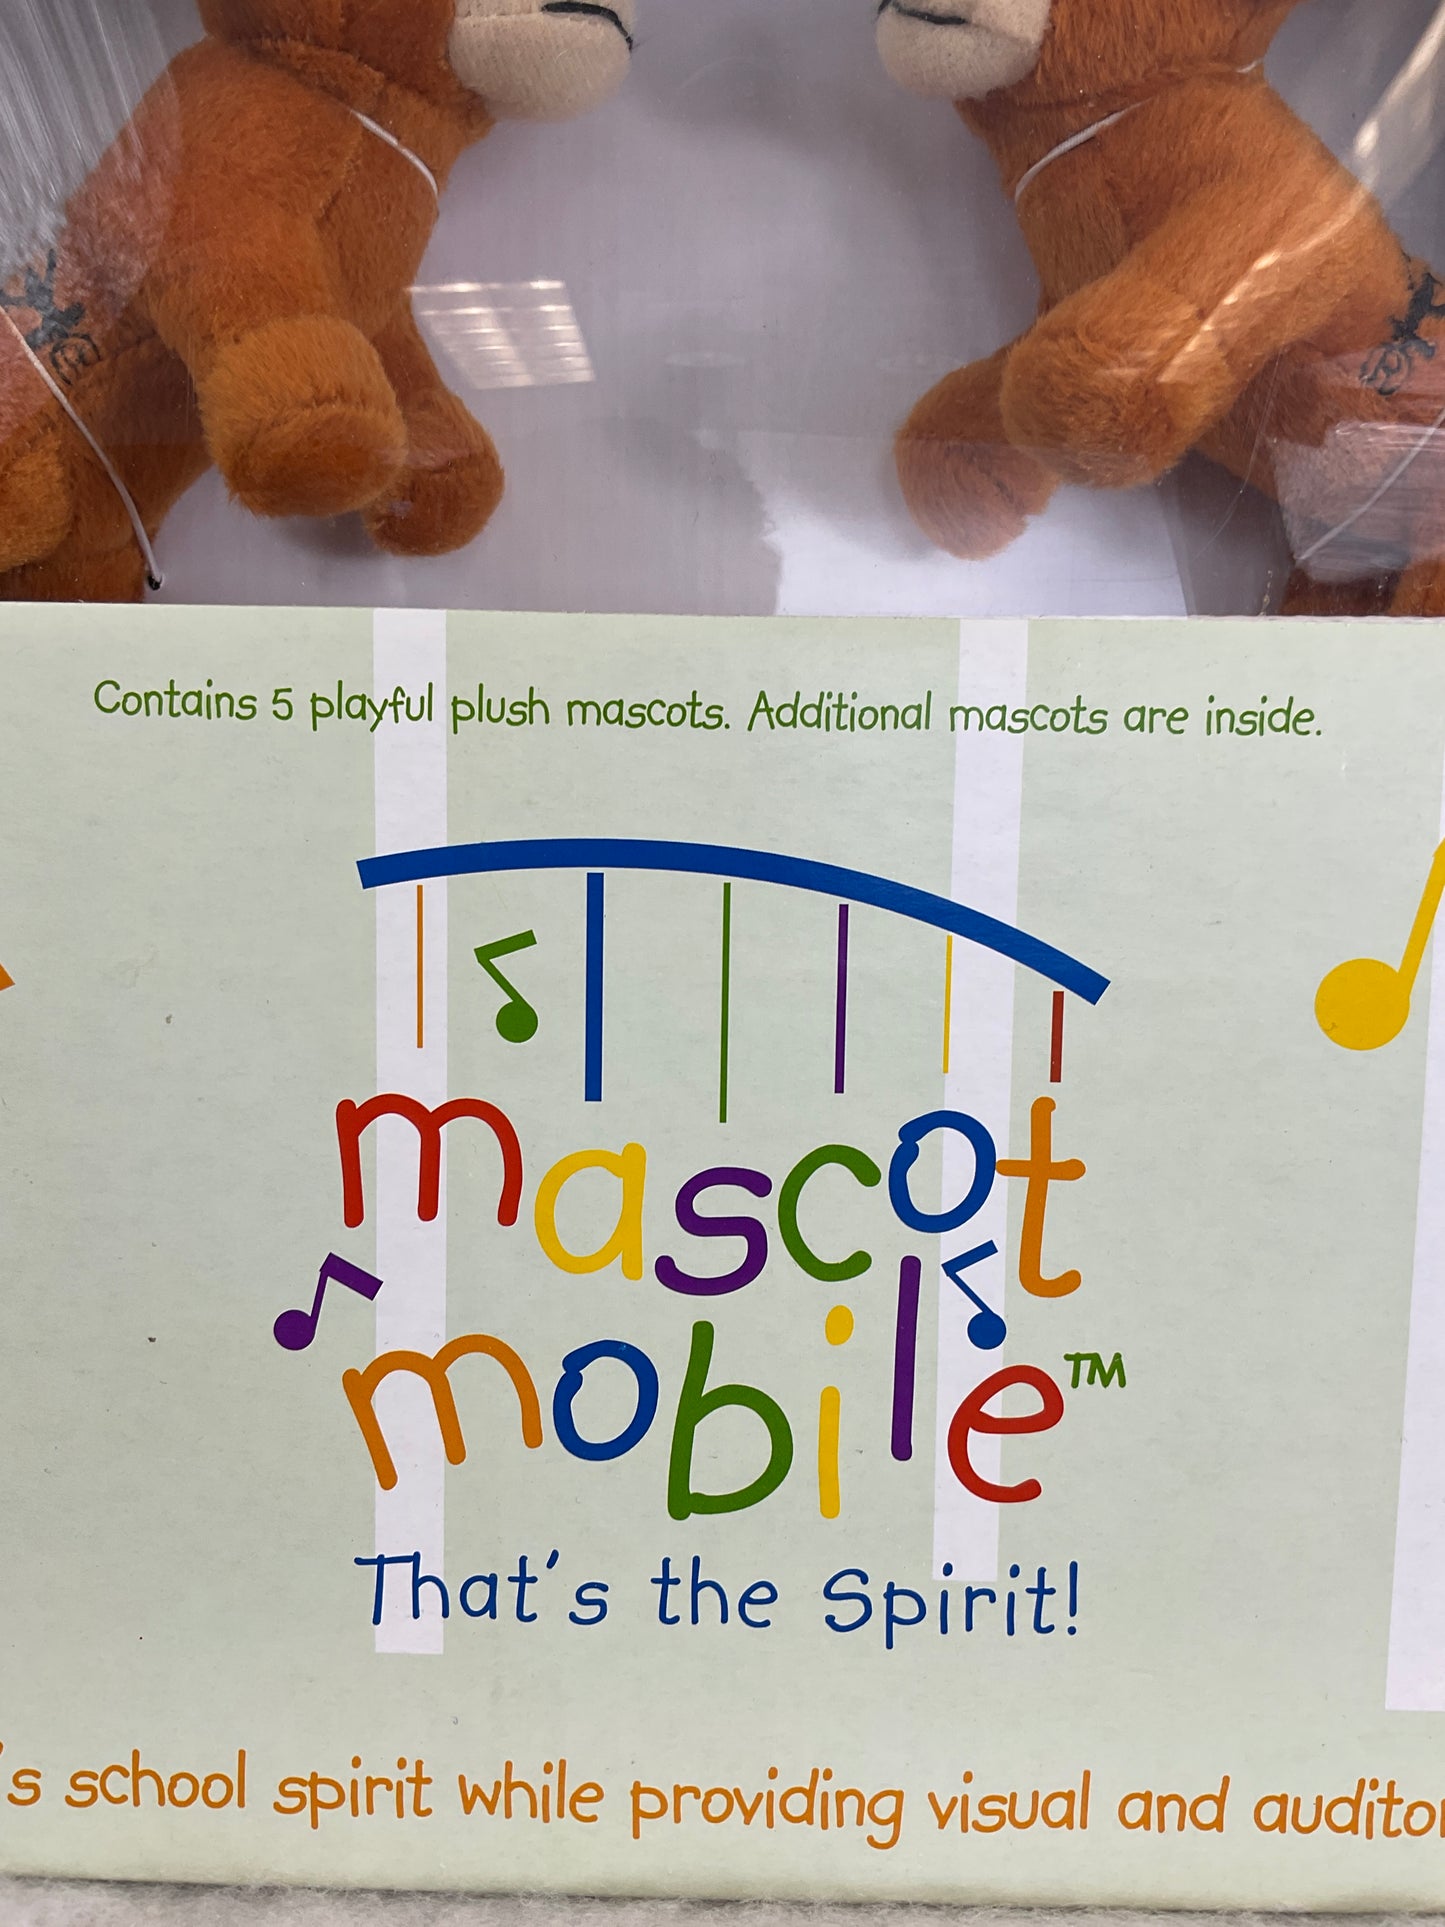 Mascot Mobile University of Texas